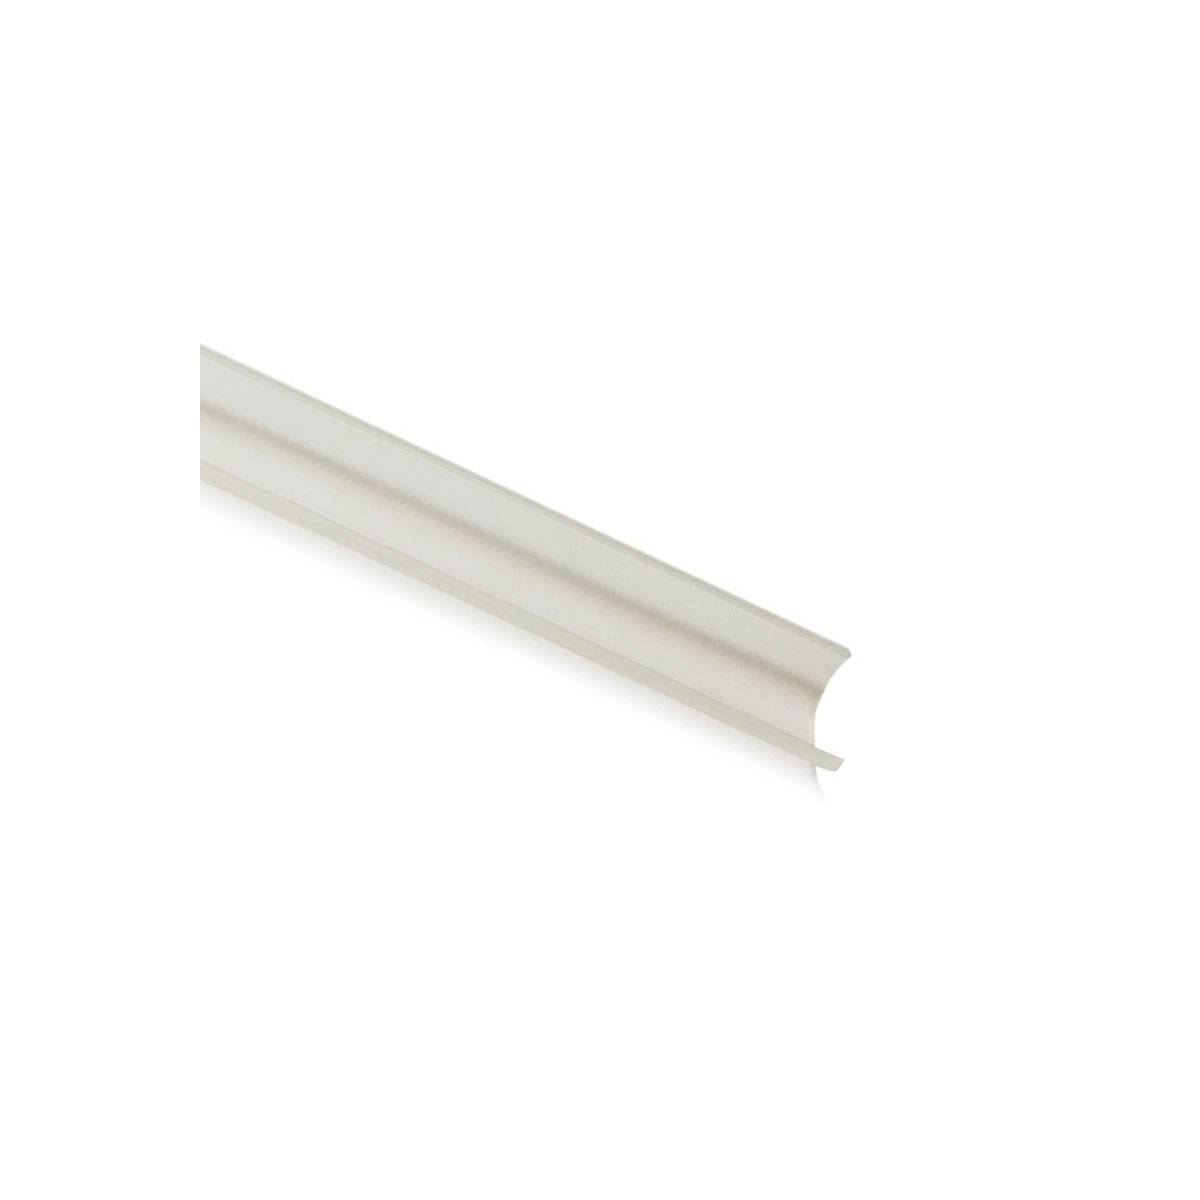 Curved glazed diffuser 2ml long (BPERF-DIAM21)